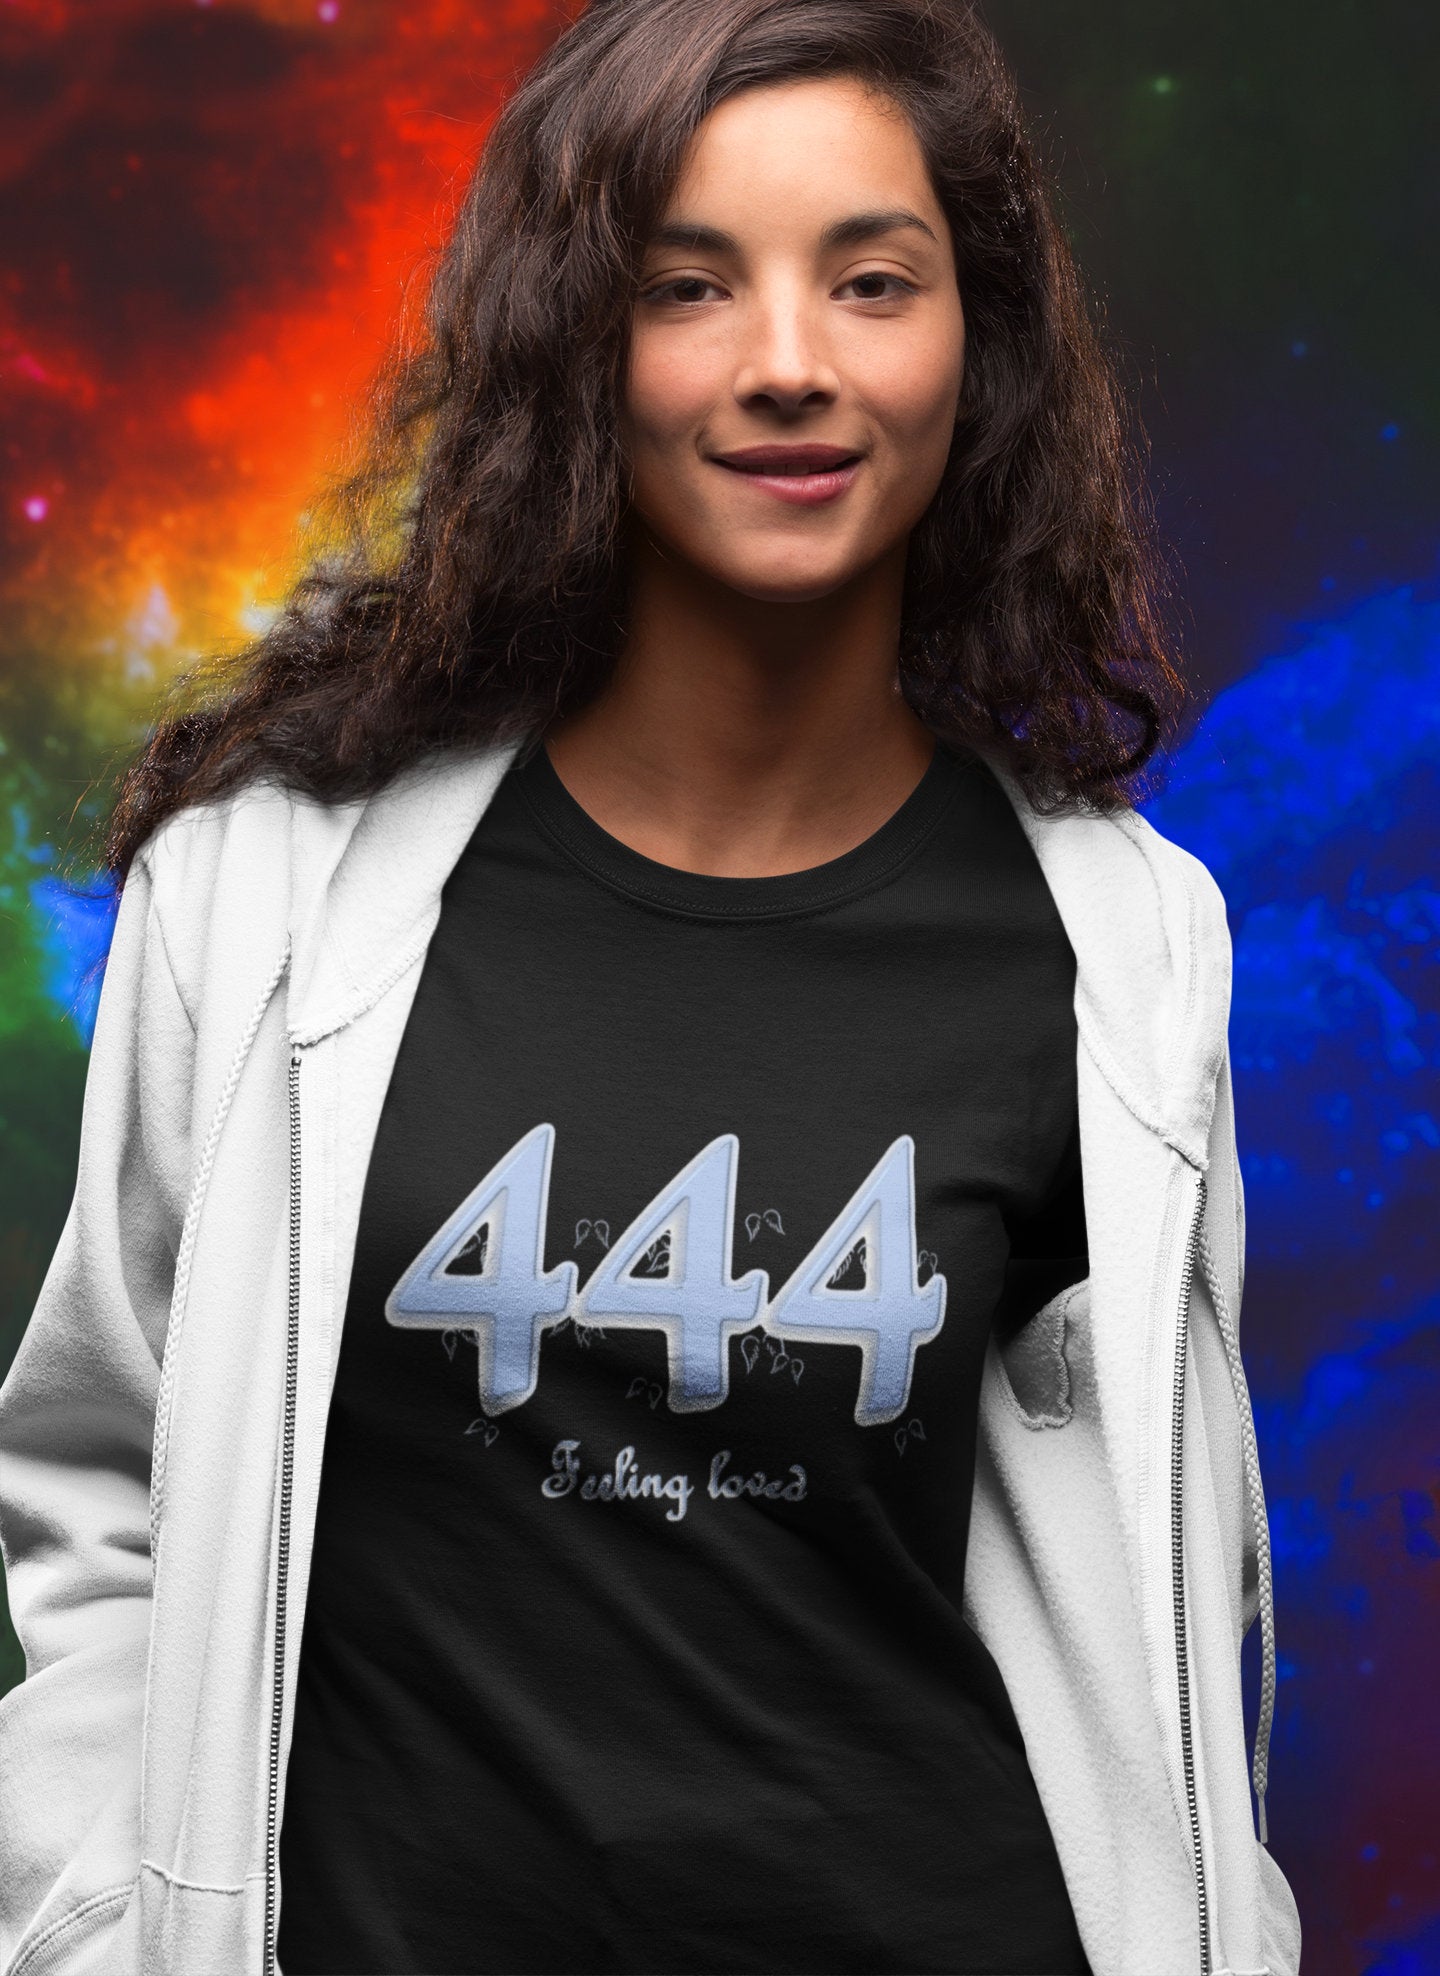 Angel Numbers - 444 Feeling Loved - Adult Unisex T-Shirt